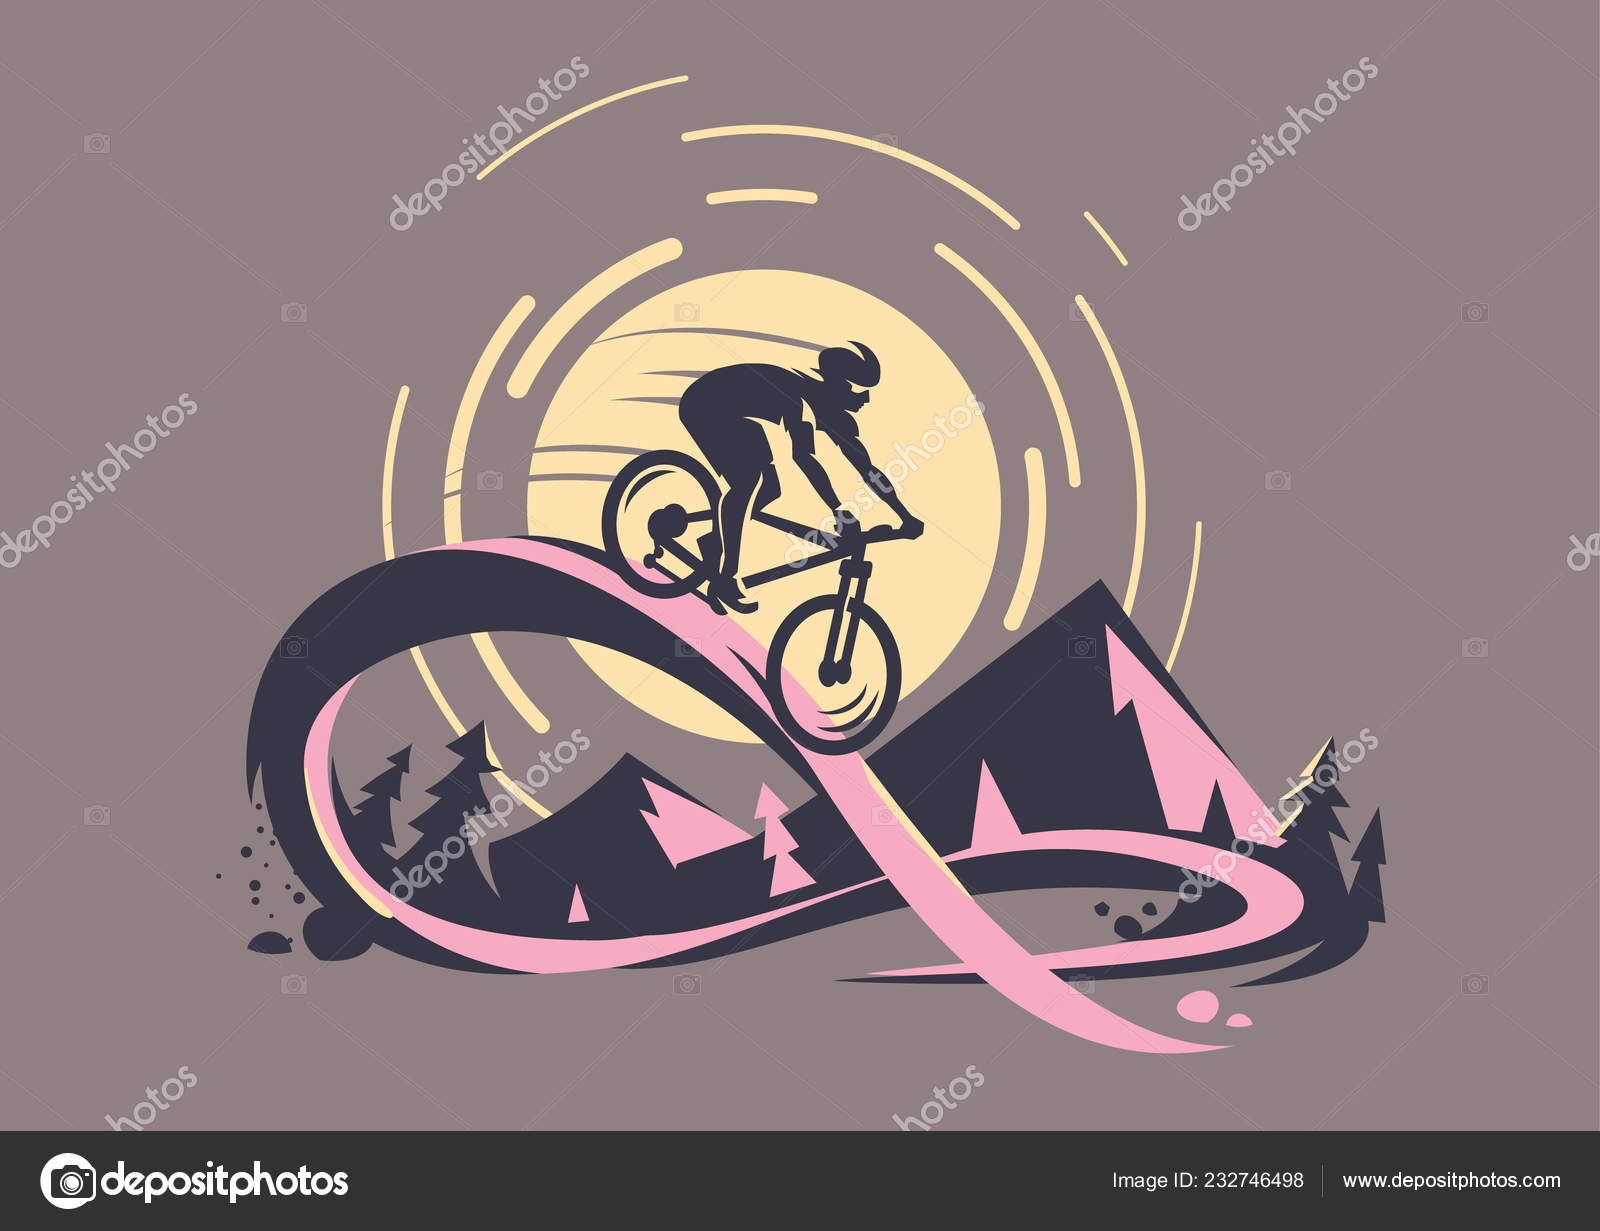 4,620 ilustraciones de stock de Bicicleta de montaña | Depositphotos®